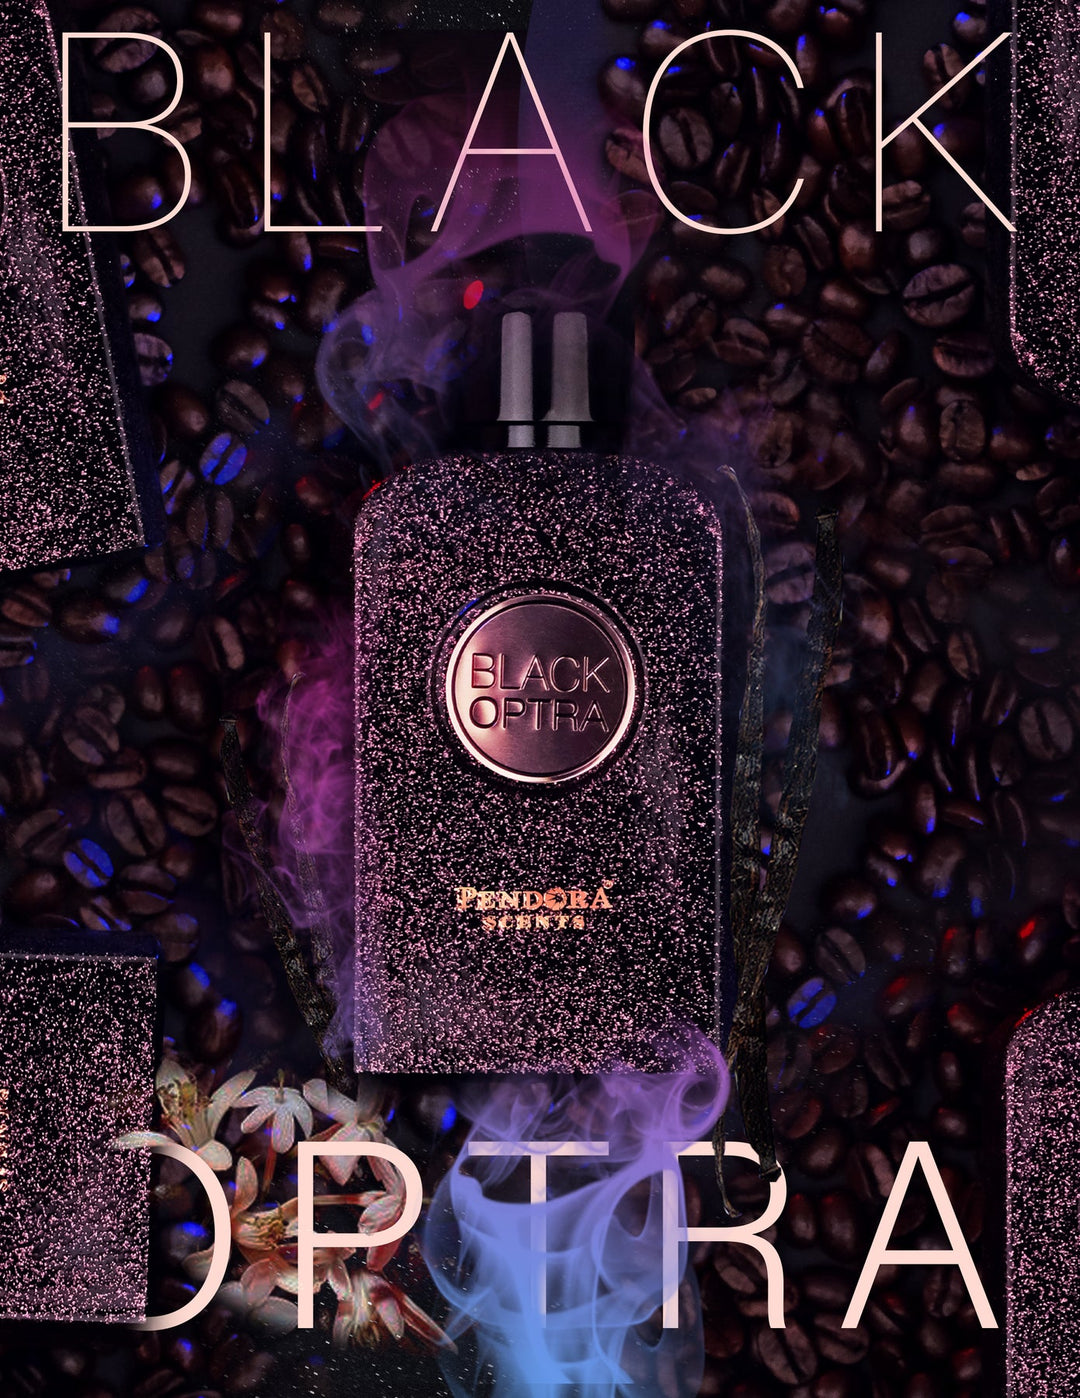 Black optra - Perfume Parlour